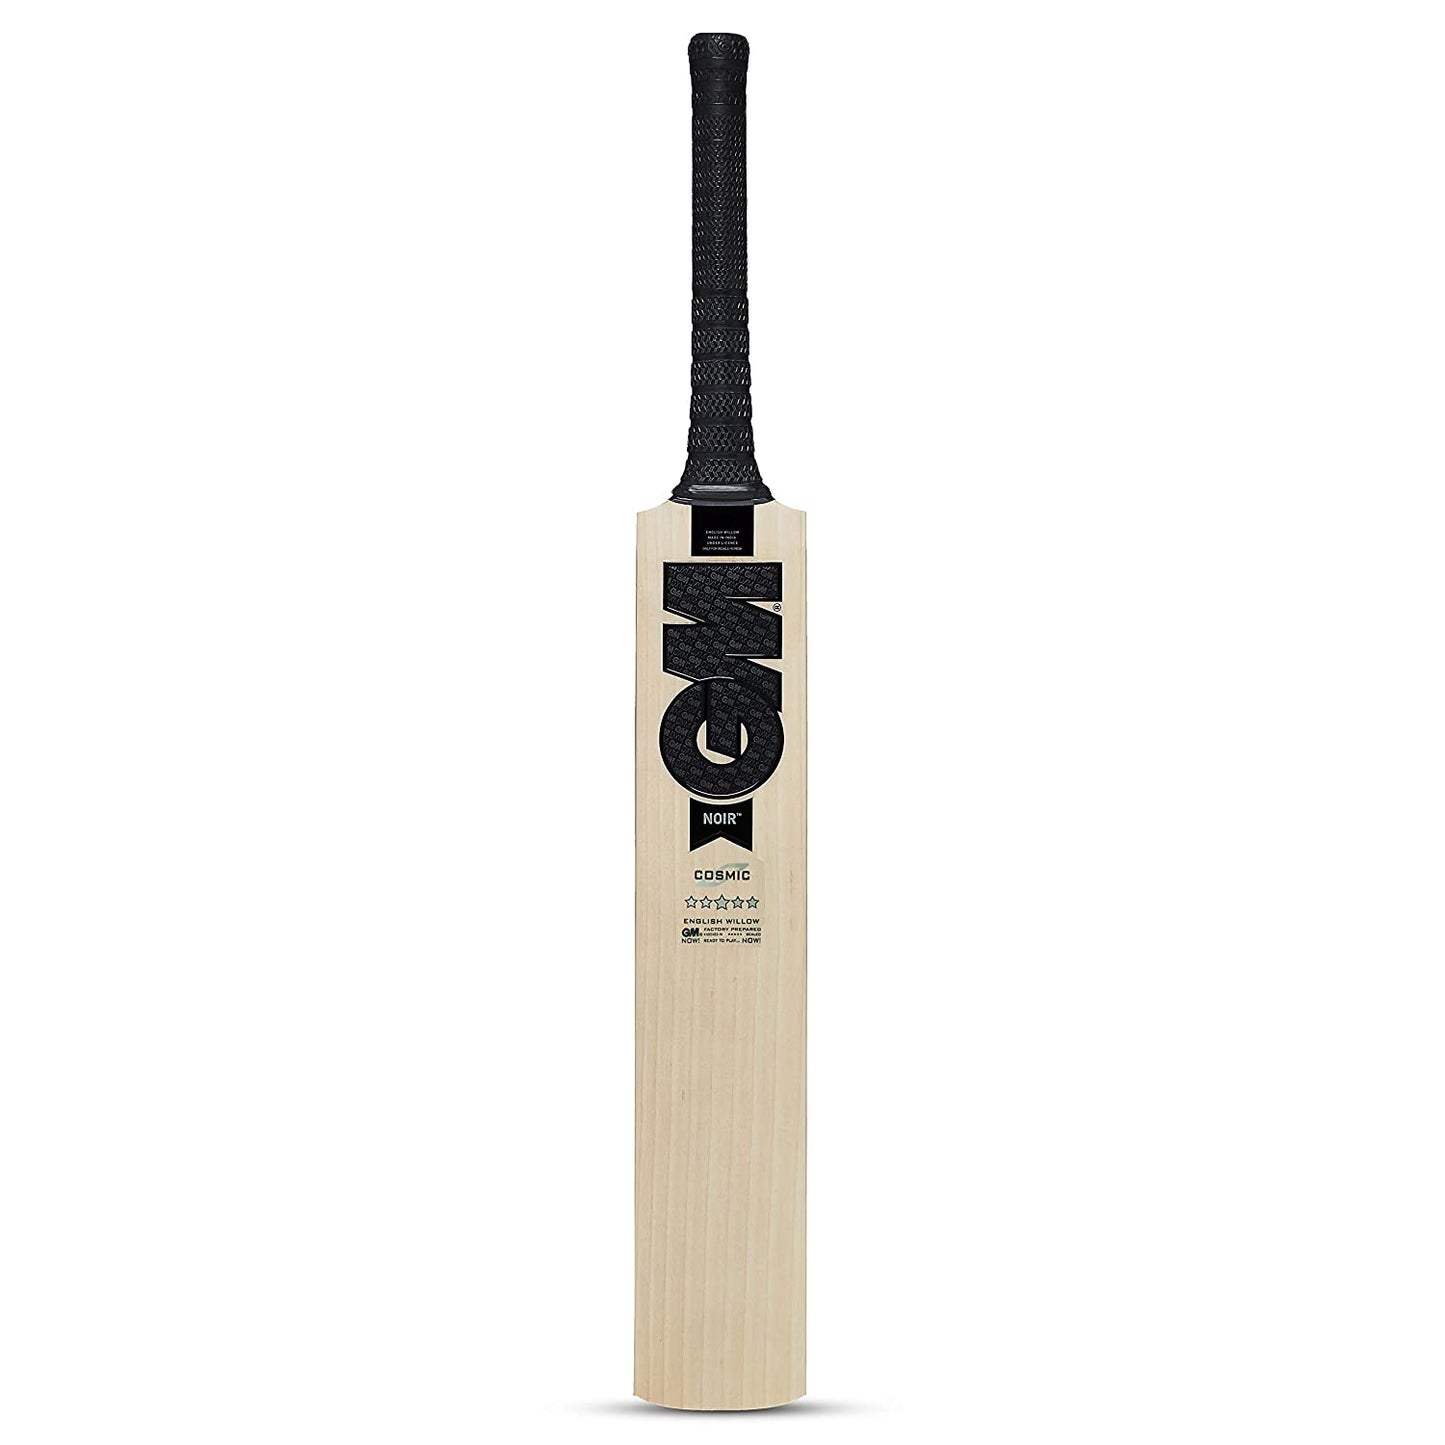 GM Noir Cosmic English Willow Cricket Bat - Best Price online Prokicksports.com